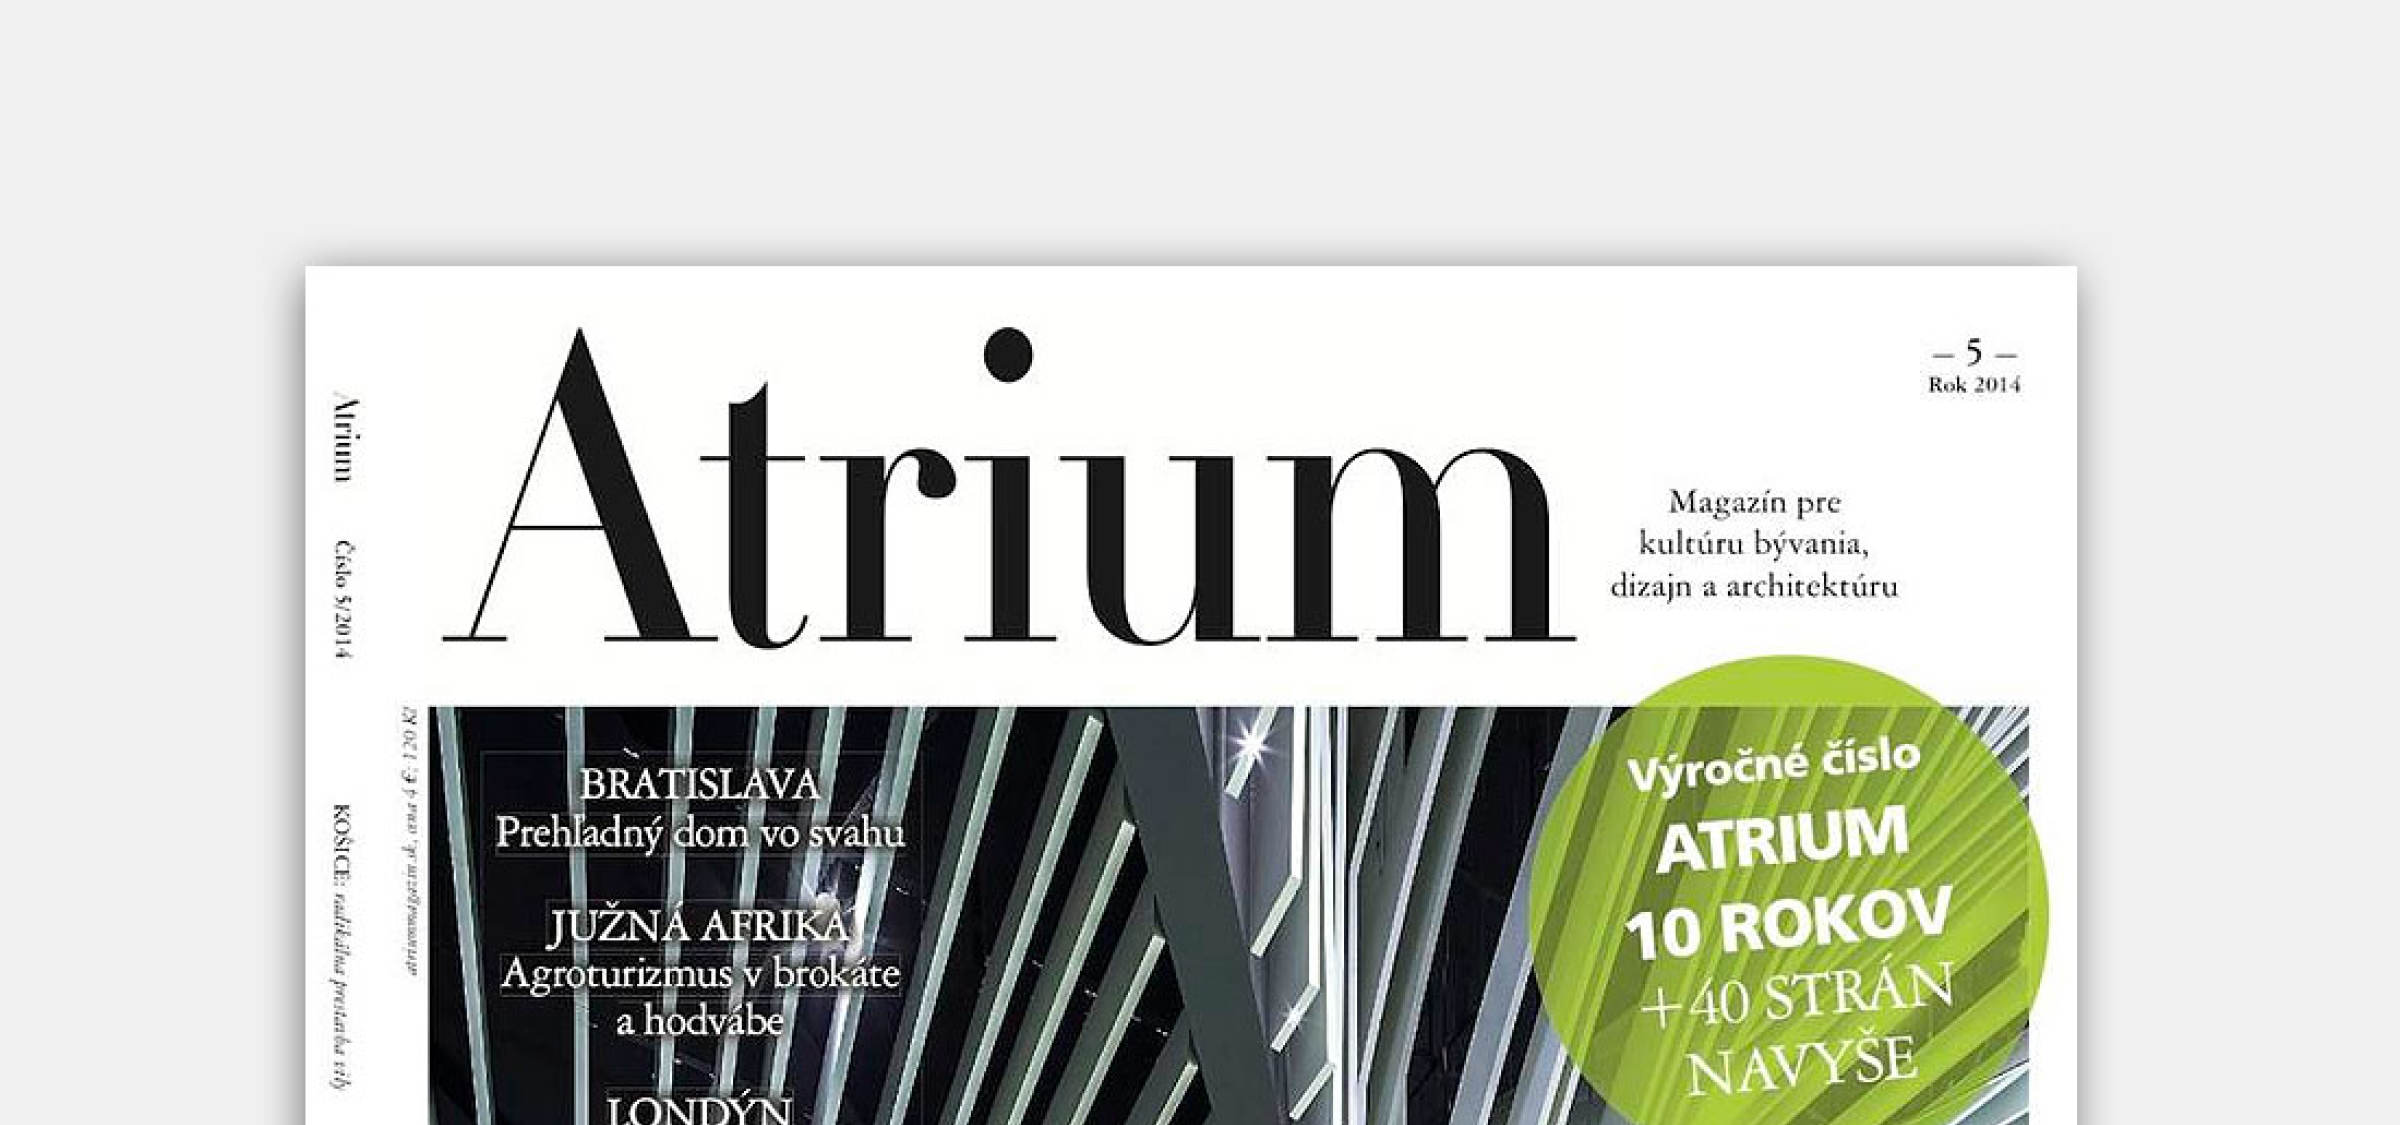 Villa M i new issue of Atrium magazine | News | Atrium Architekti